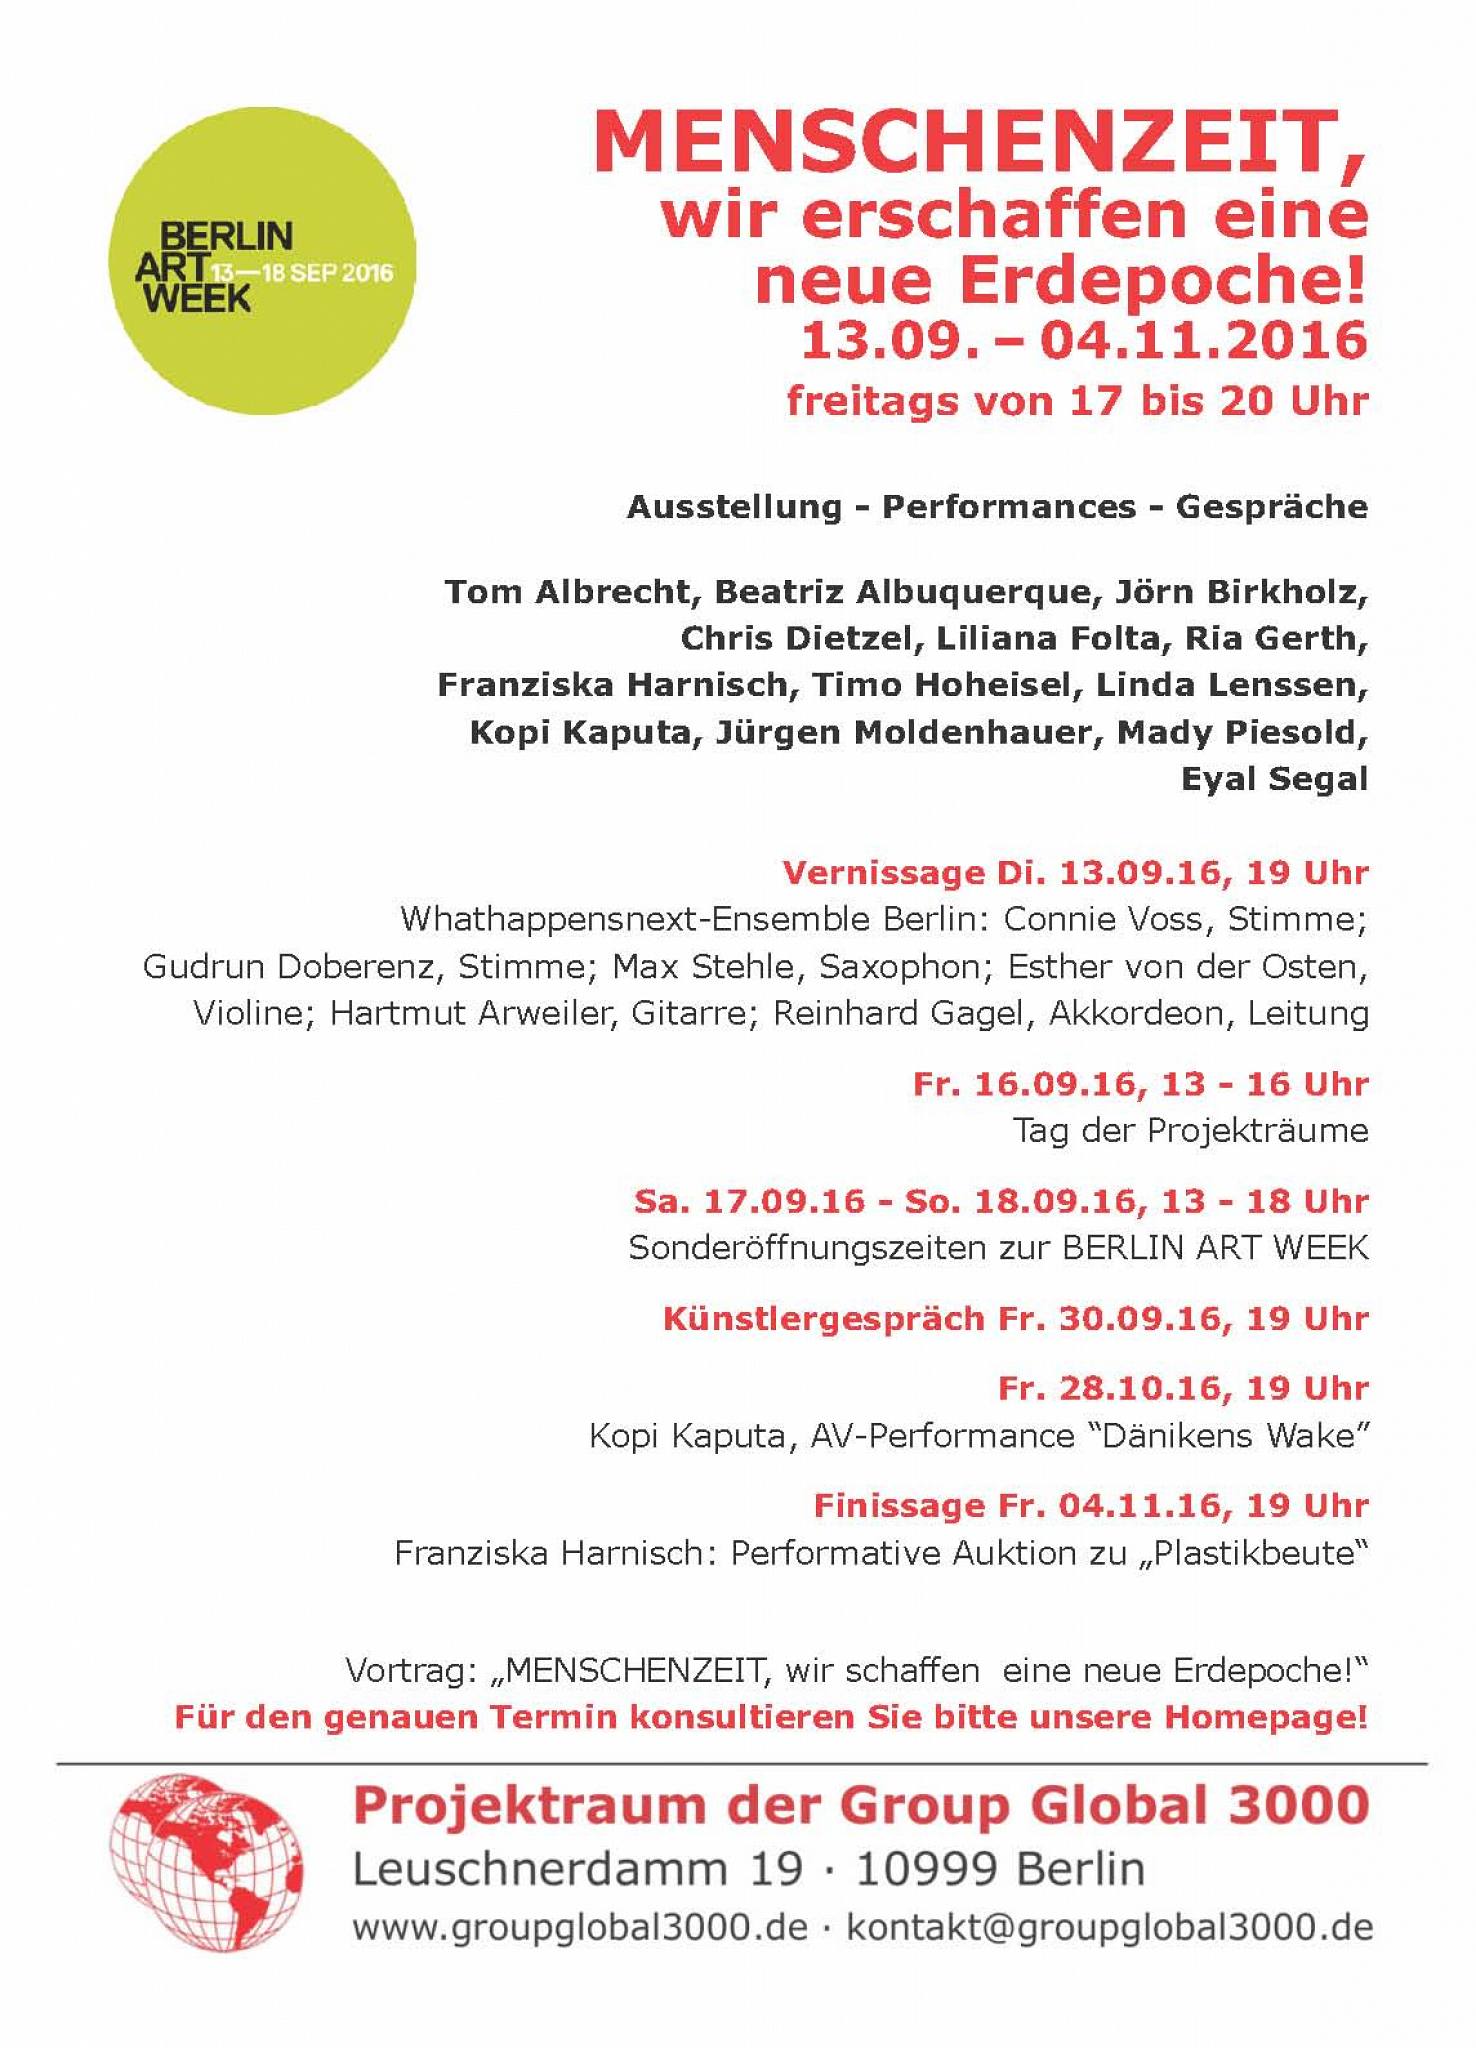 Group Global 3000 Exhibition: Berlin 2016 flyer